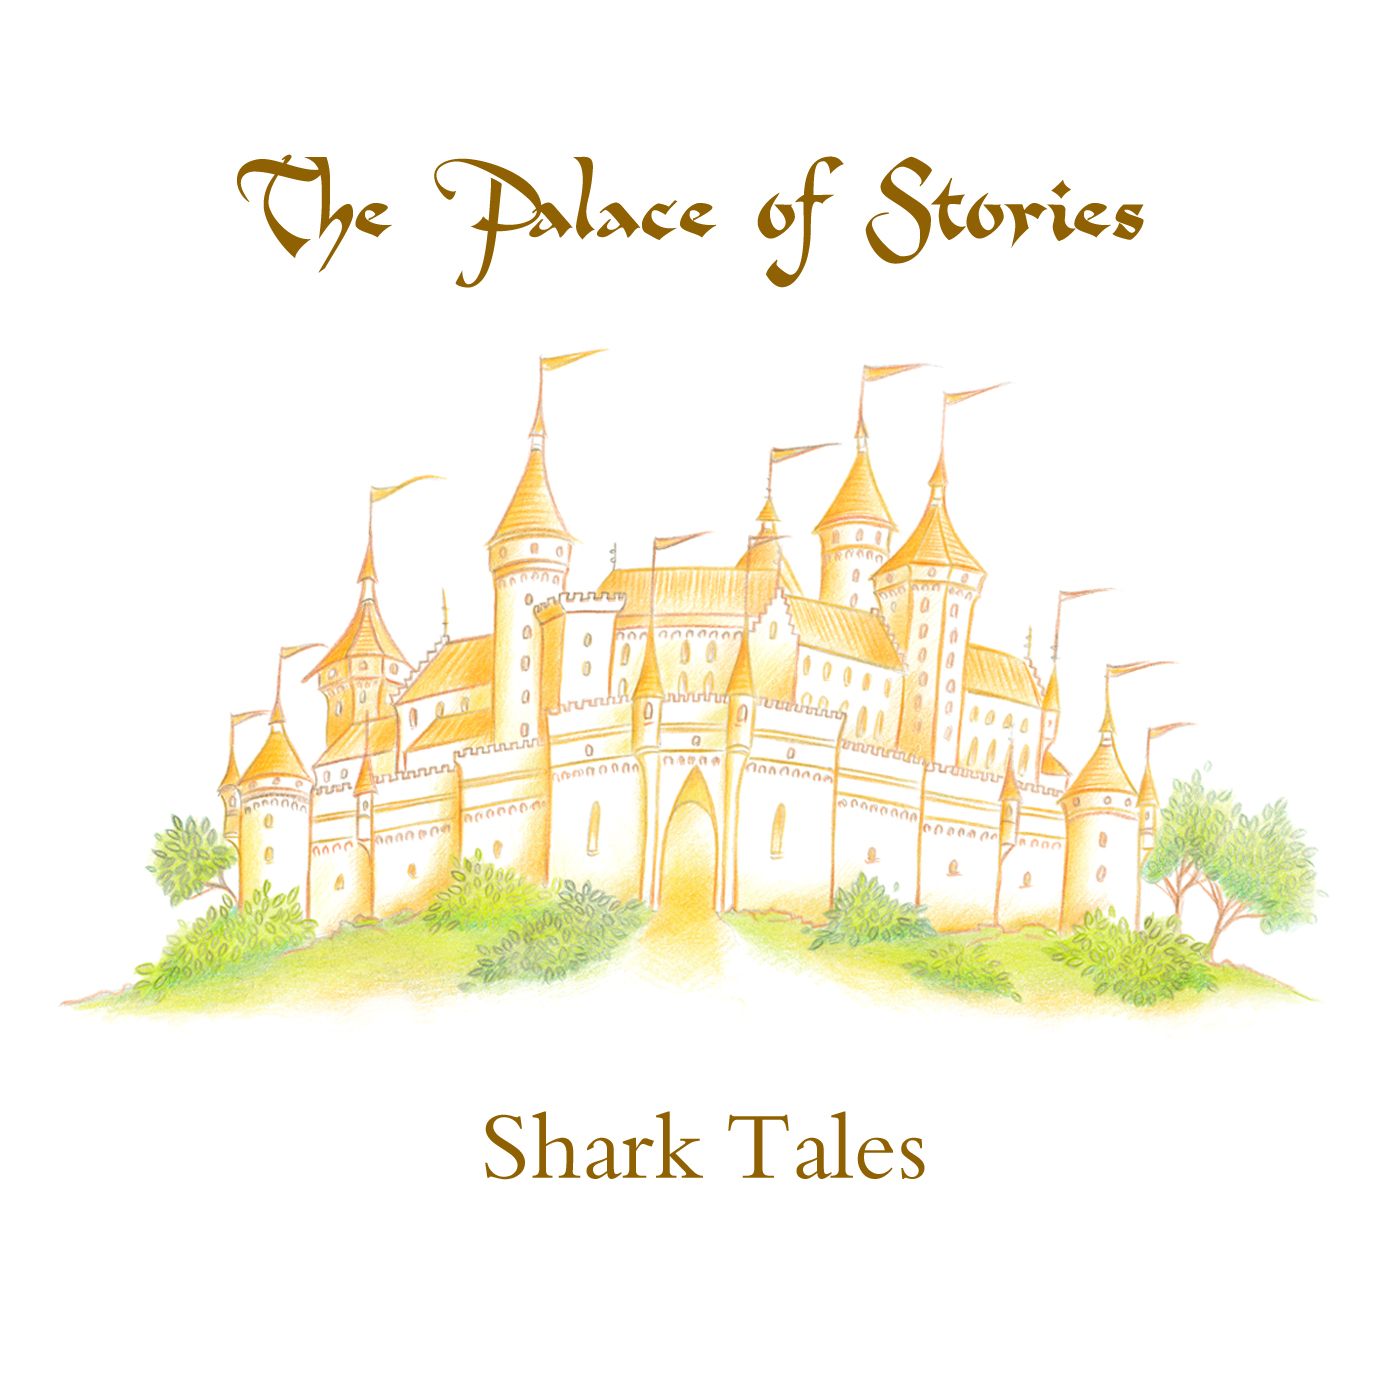 Shark Tales